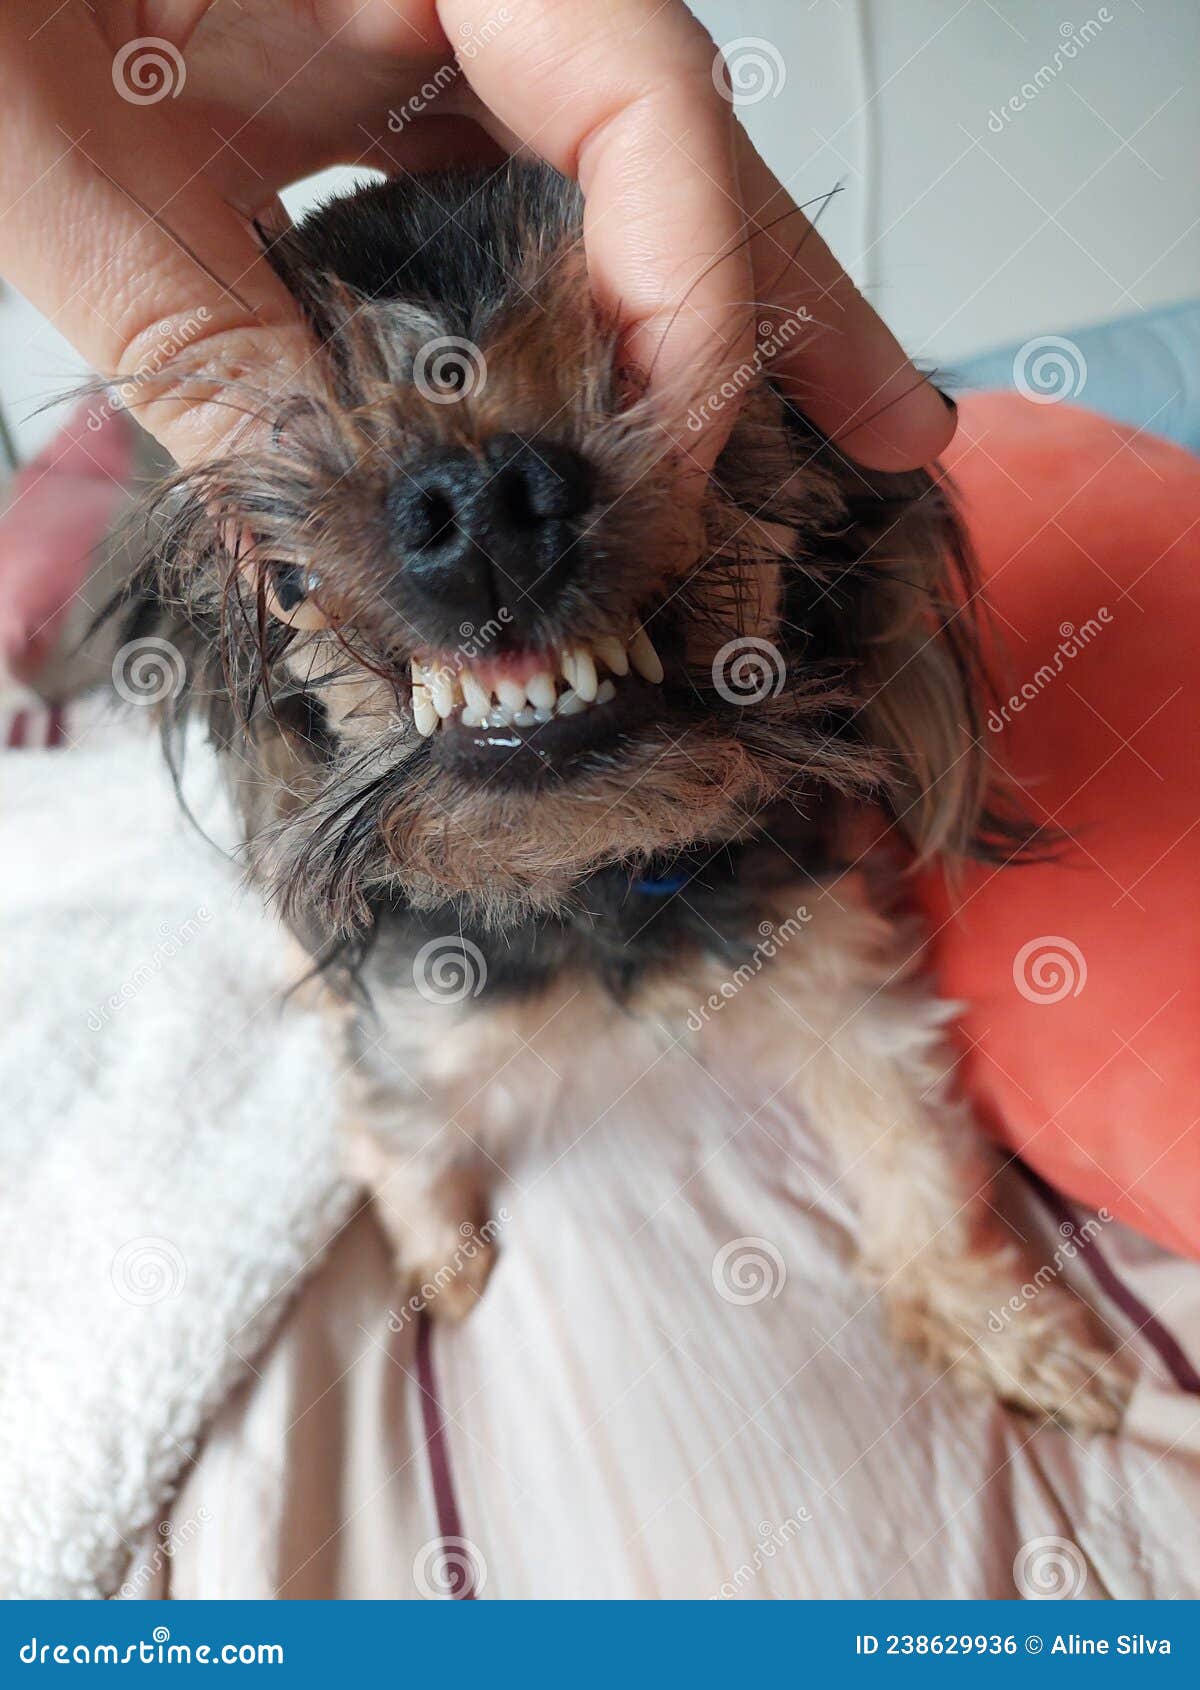 yorkshire terrier teeth, smiling dog